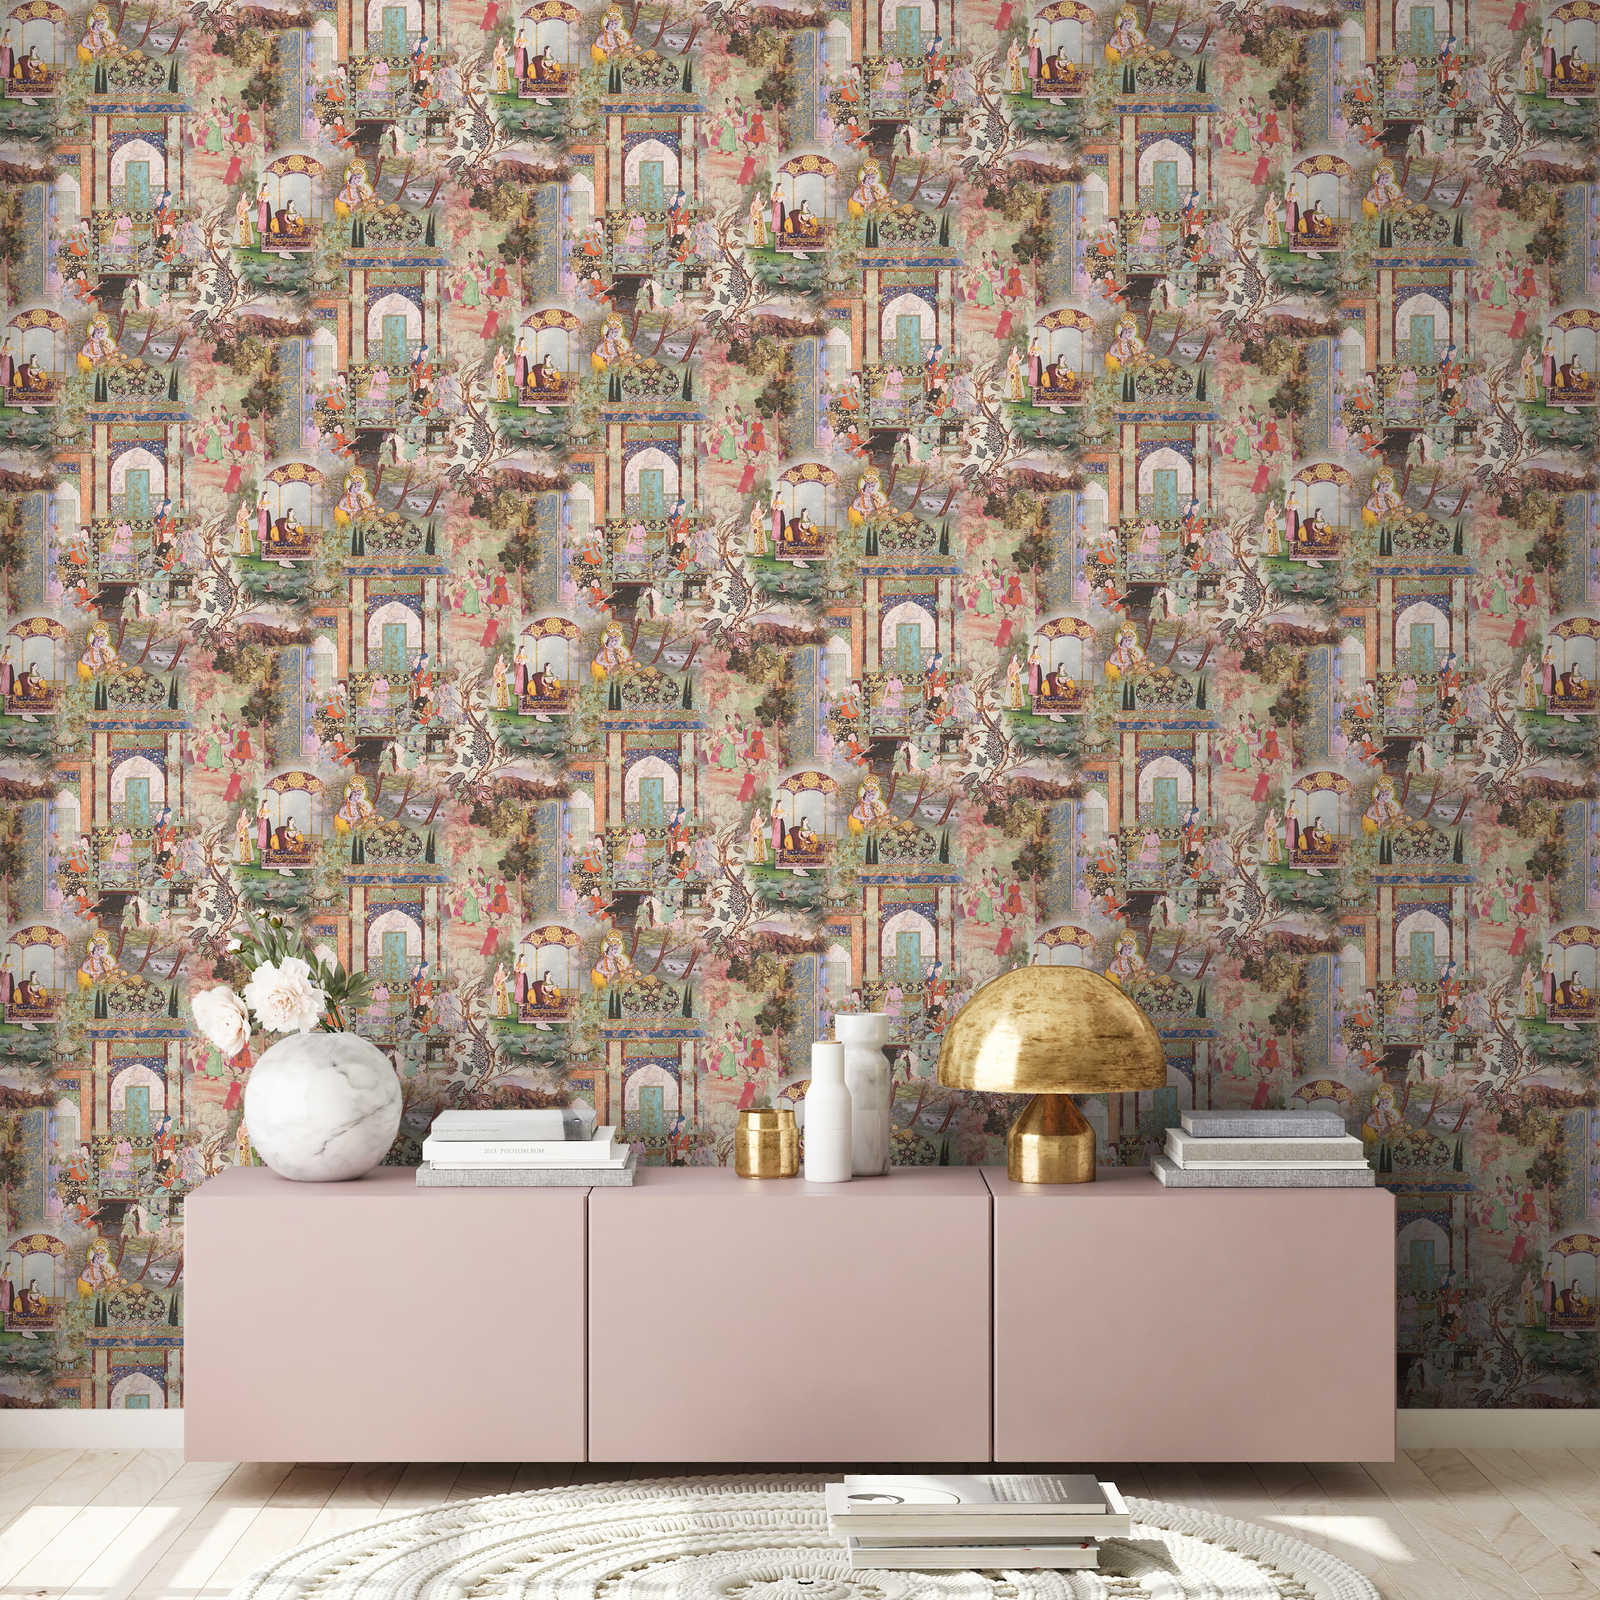             Pattern wallpaper non-woven vintage ethnic motif - colourful
        